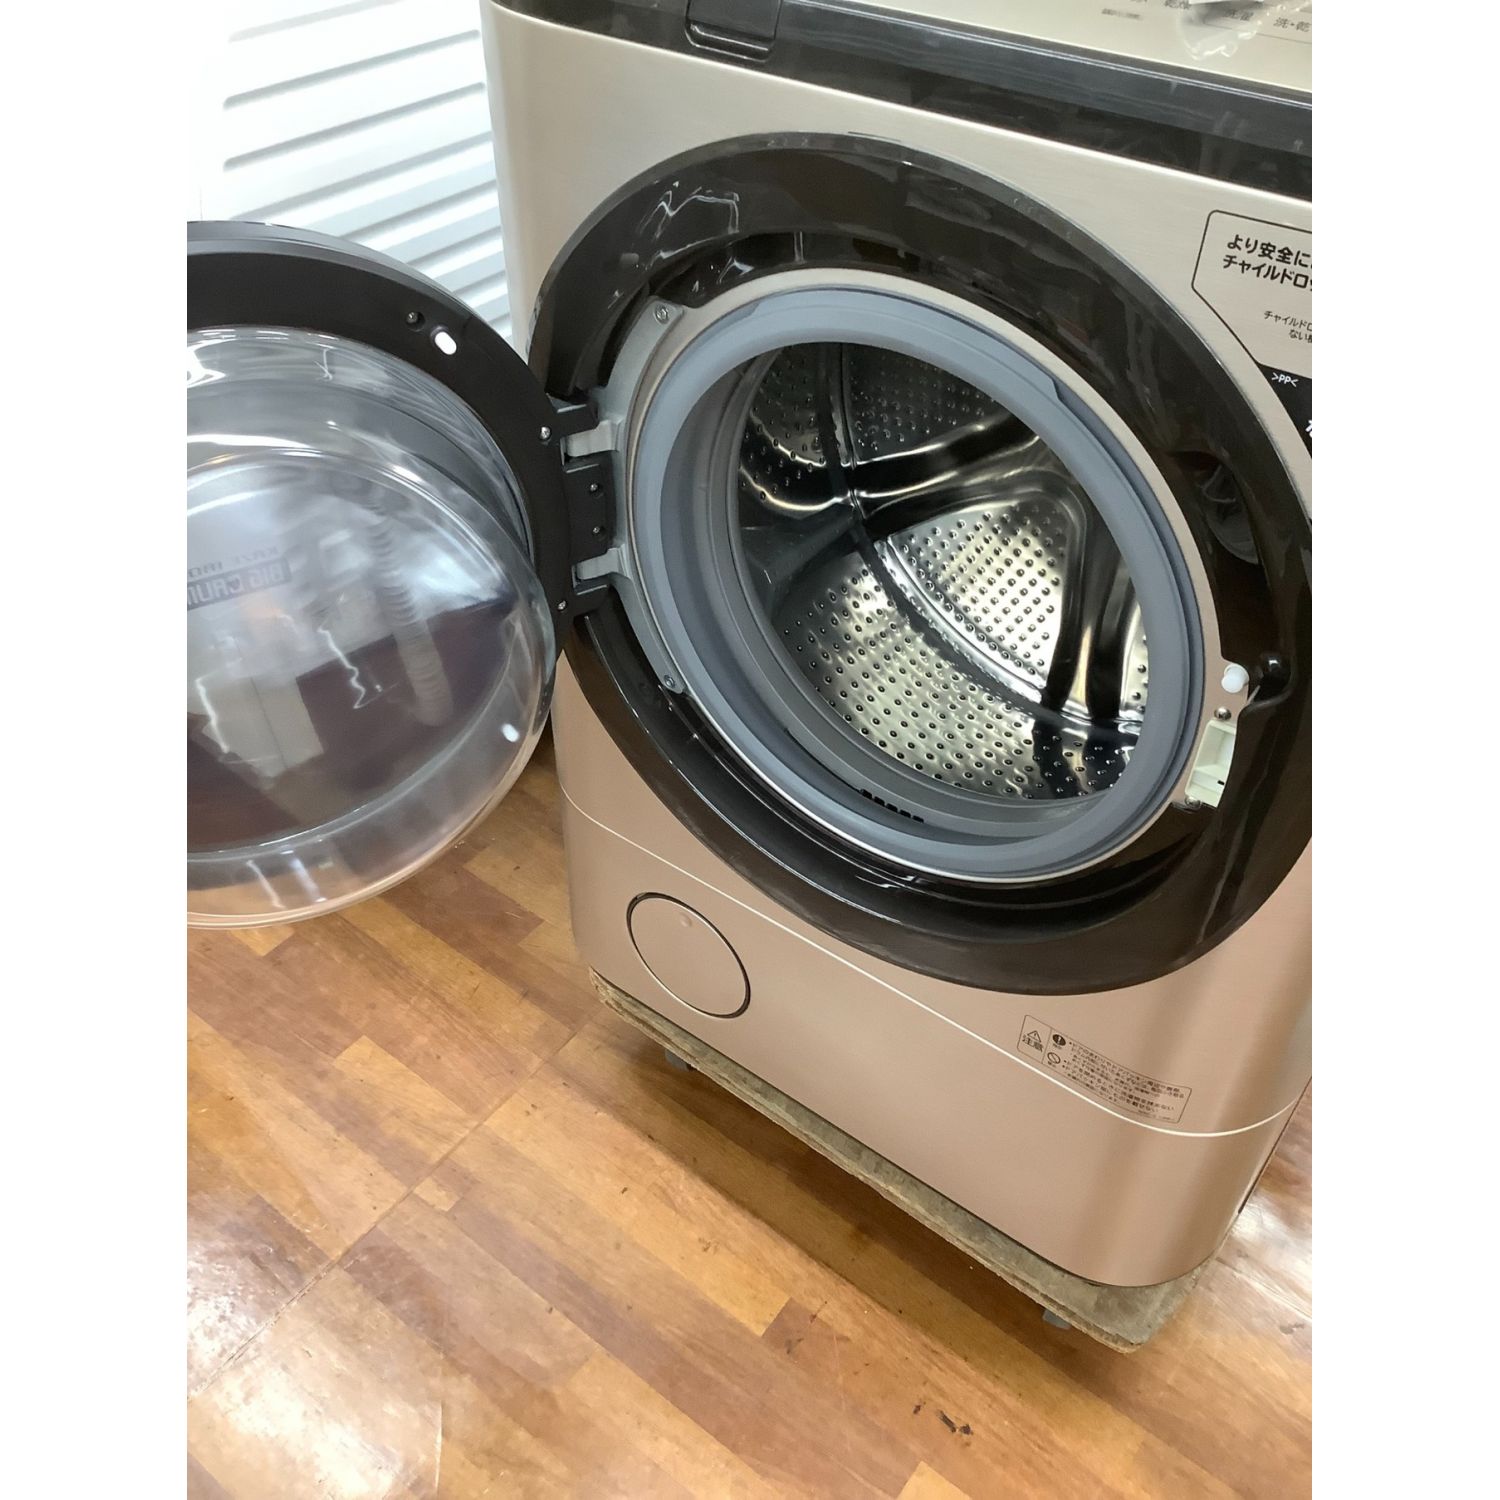 HITACHI (ヒタチ) ドラム式洗濯乾燥機 12.0kg 7.0kg BD-NX120FR 2020年 